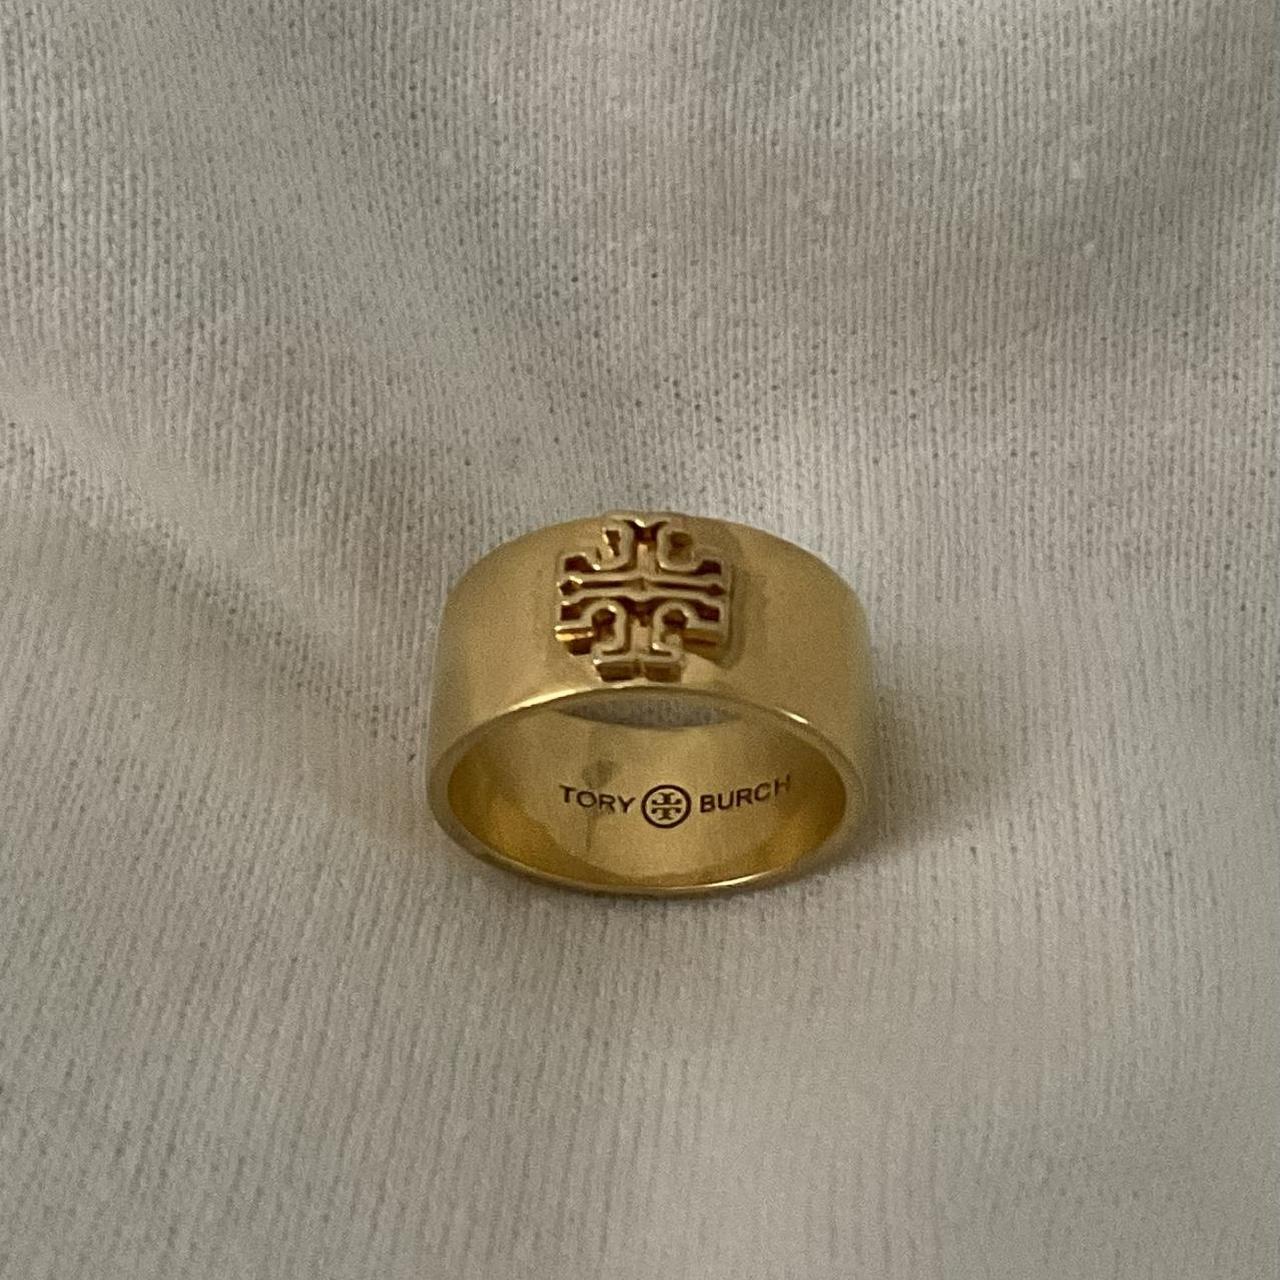 Gold 'Eleanor' ring with logo Tory Burch - GenesinlifeShops NC